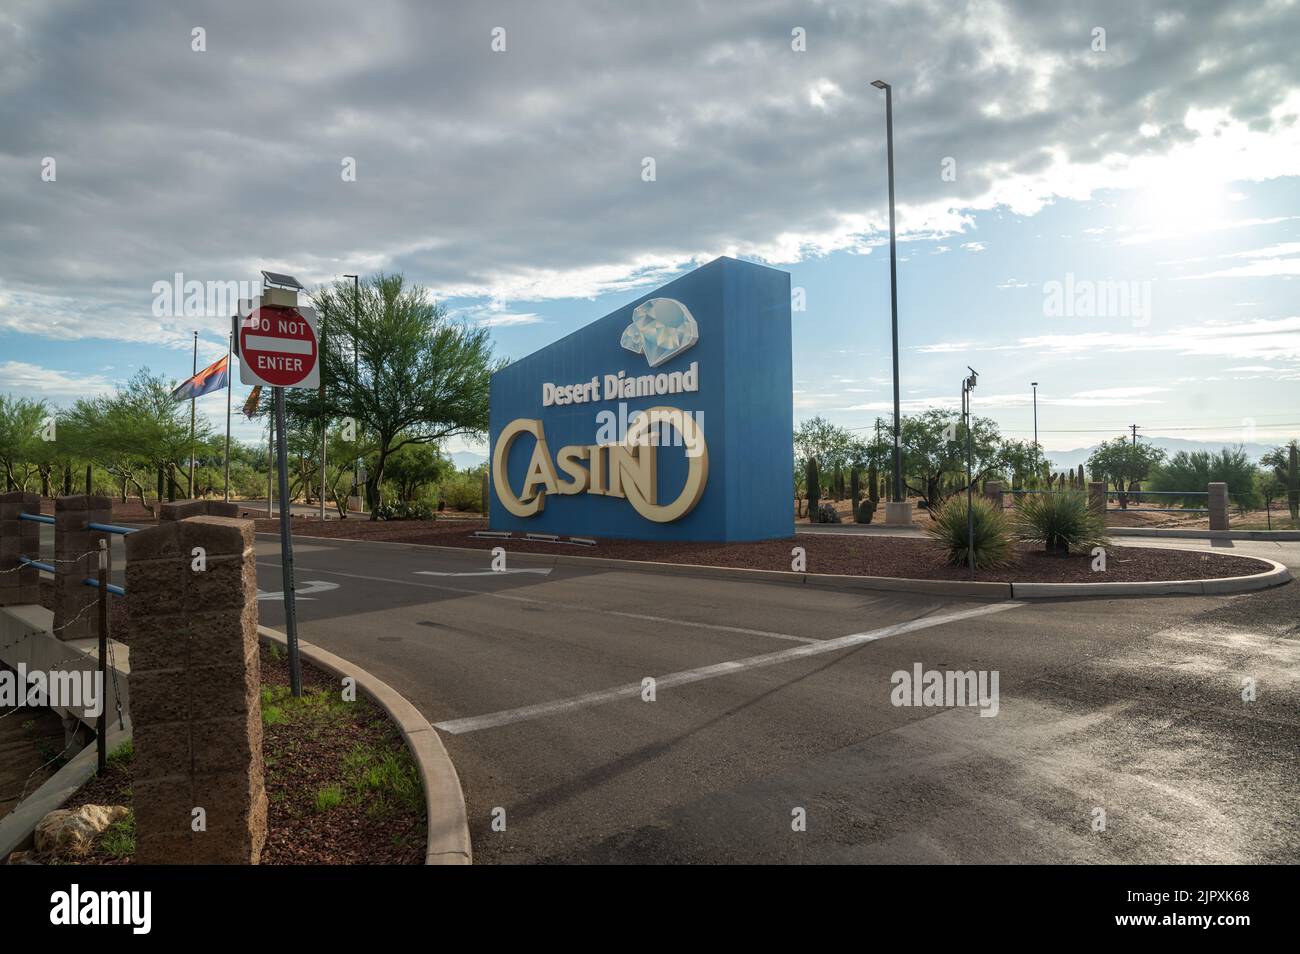 Welcome sign for Desert Diamond Casino near Tucson, Arizona Stock Photo